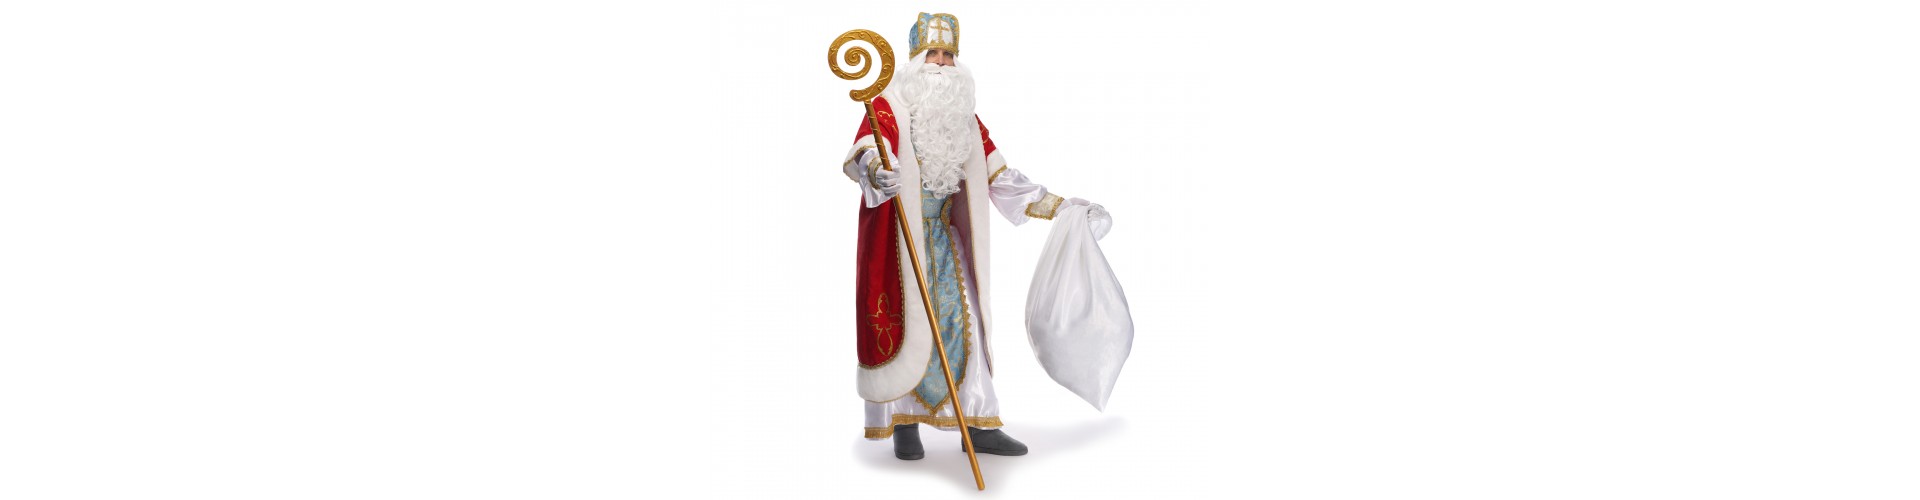 Costumes of St. Nicholas - a wizard raising children